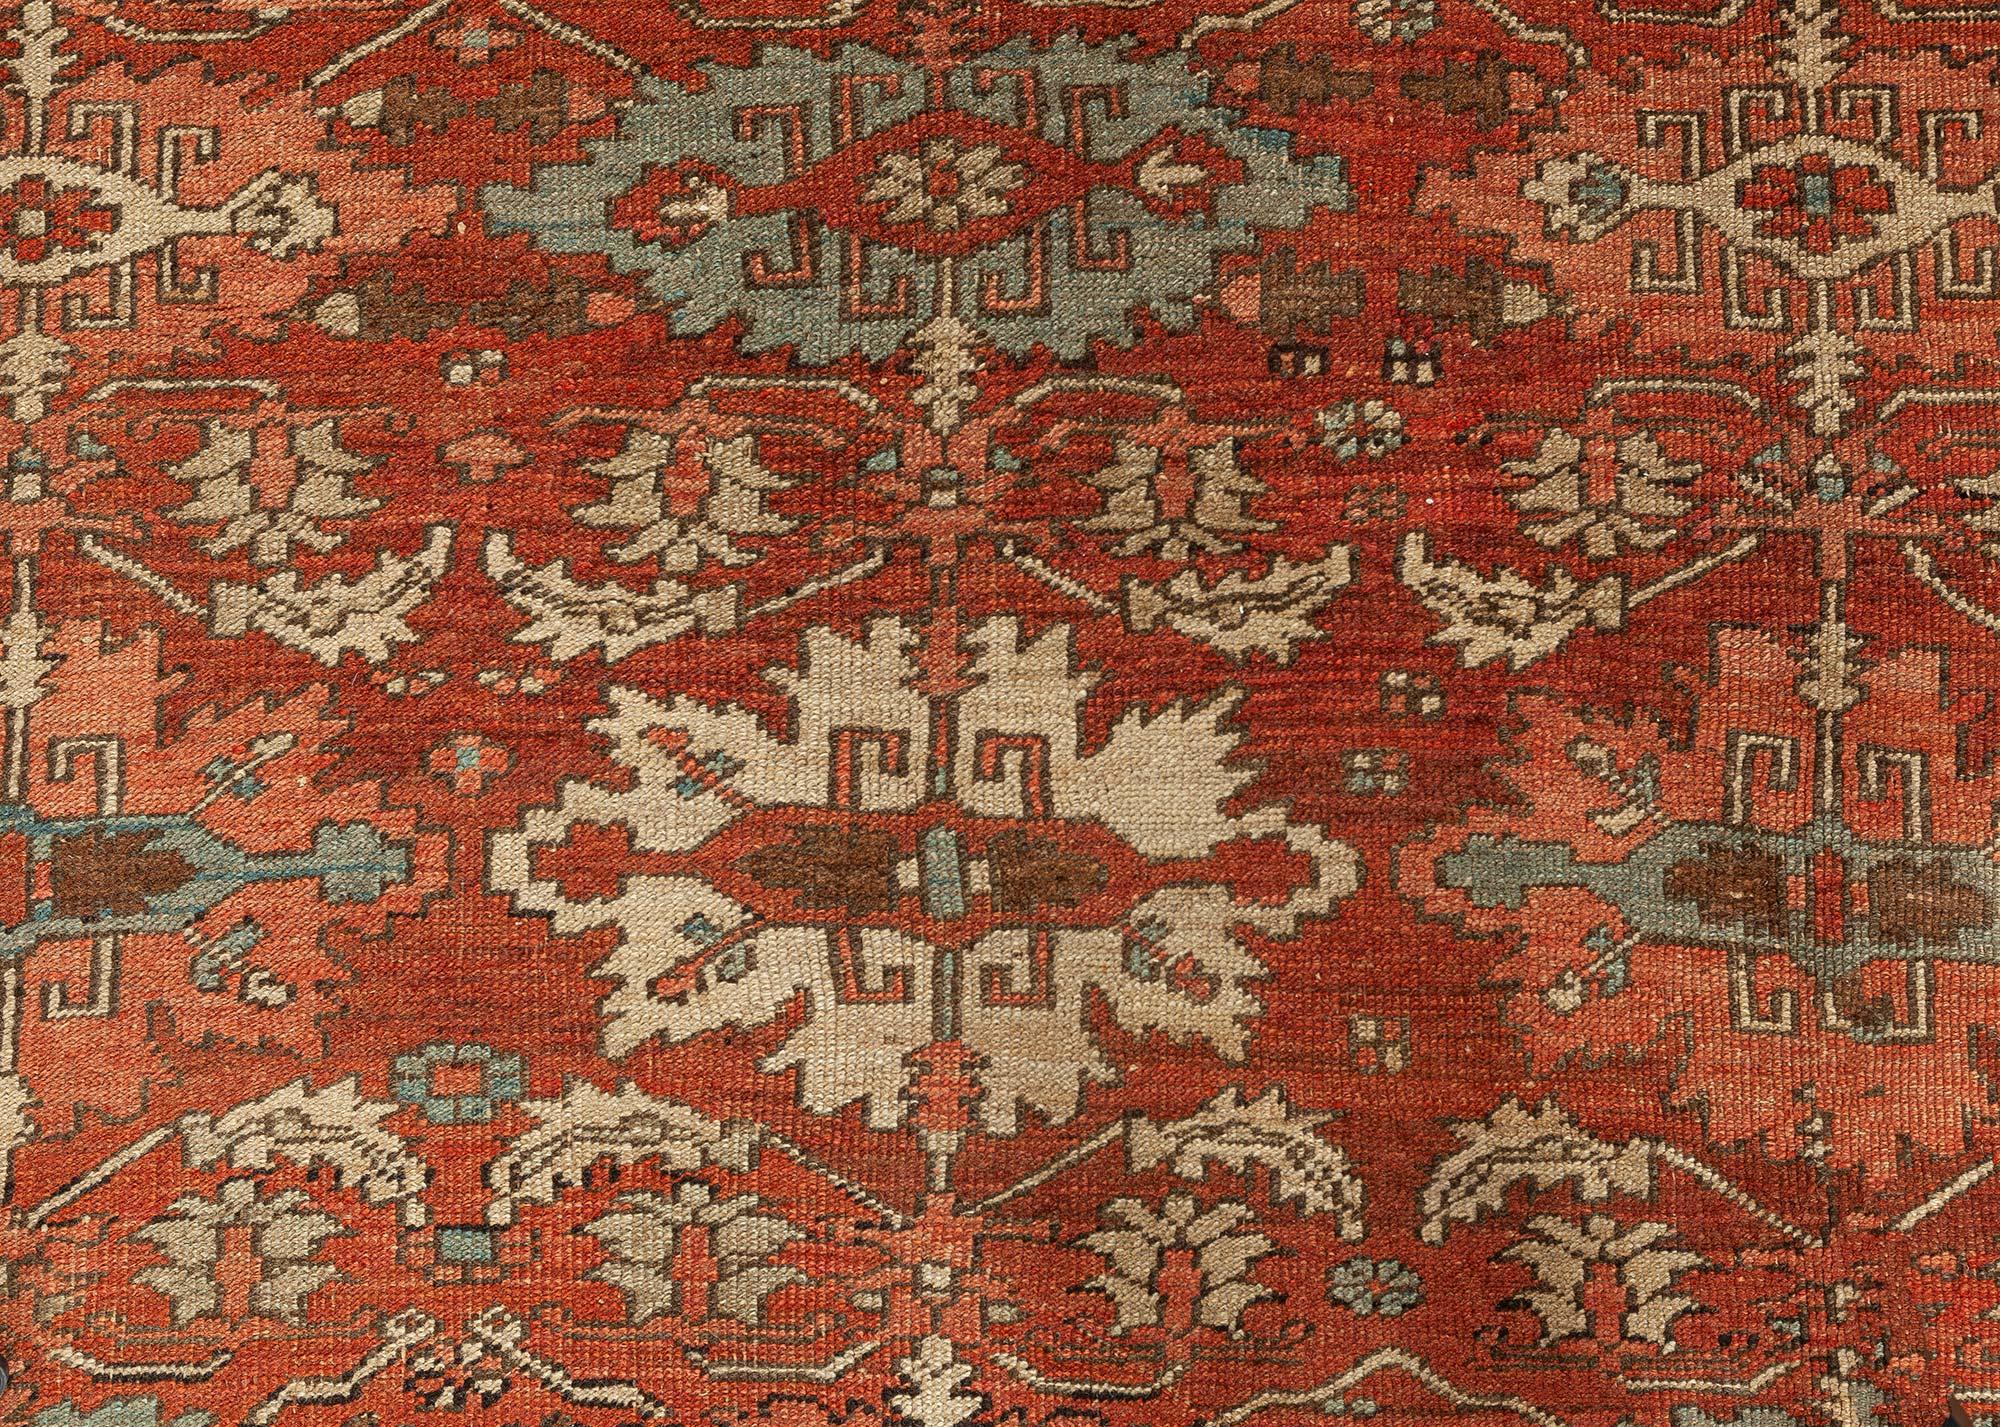 Antique Heriz red handmade wool rug
Size: 9'8